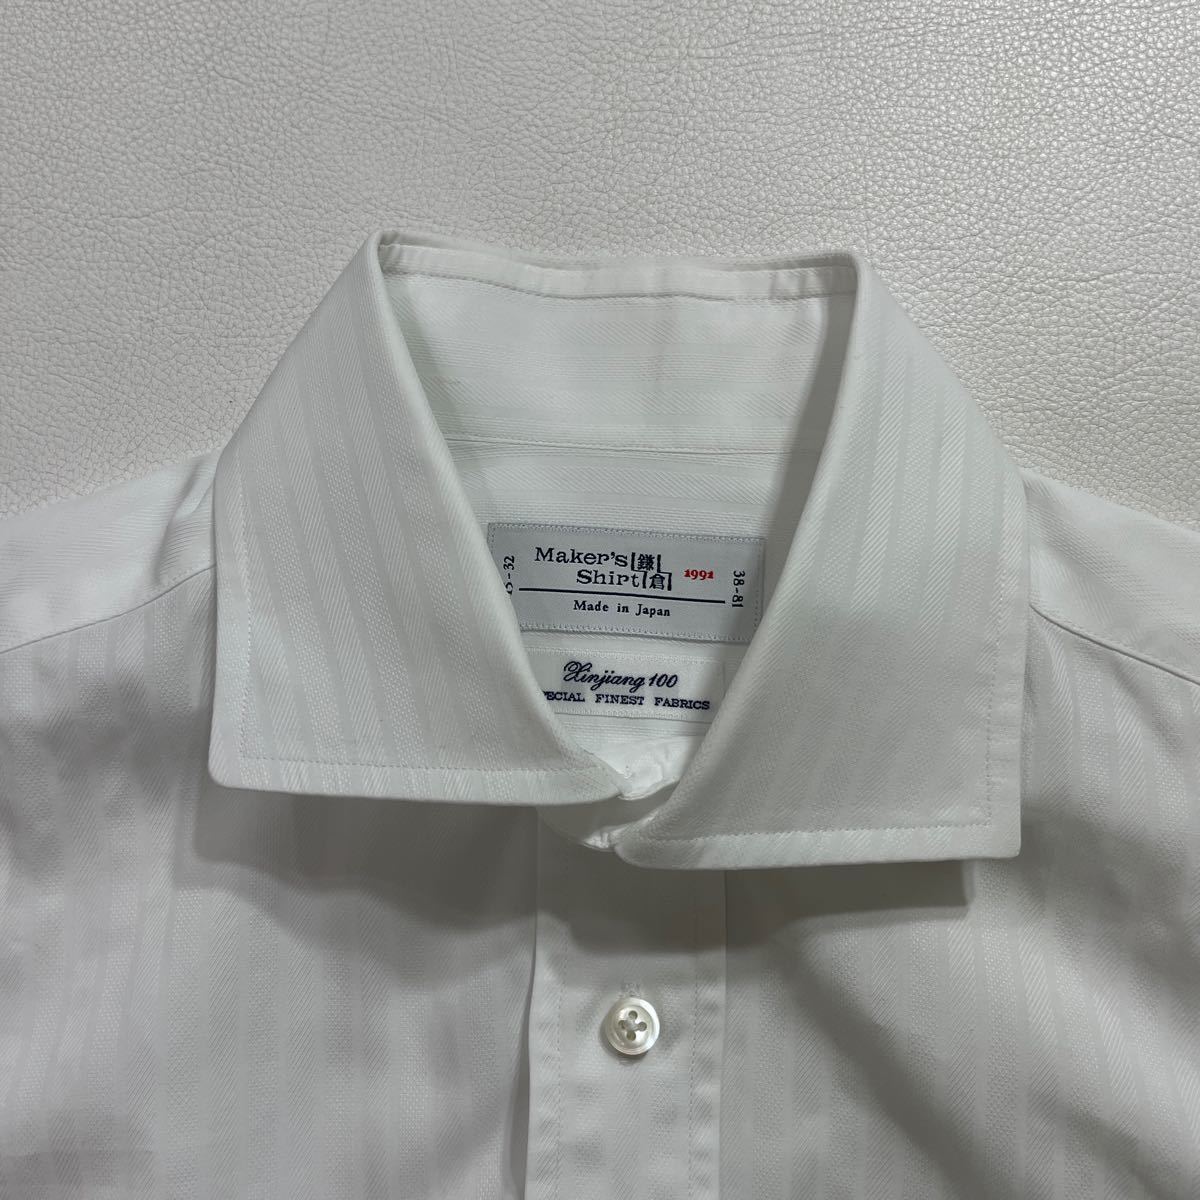 259 Maker's Shirt 鎌倉 メーカーズシャツ カマクラ 長袖 ワイシャツ 日本製 ビジネス オフィス コットン ホワイト 白 40222S_画像4